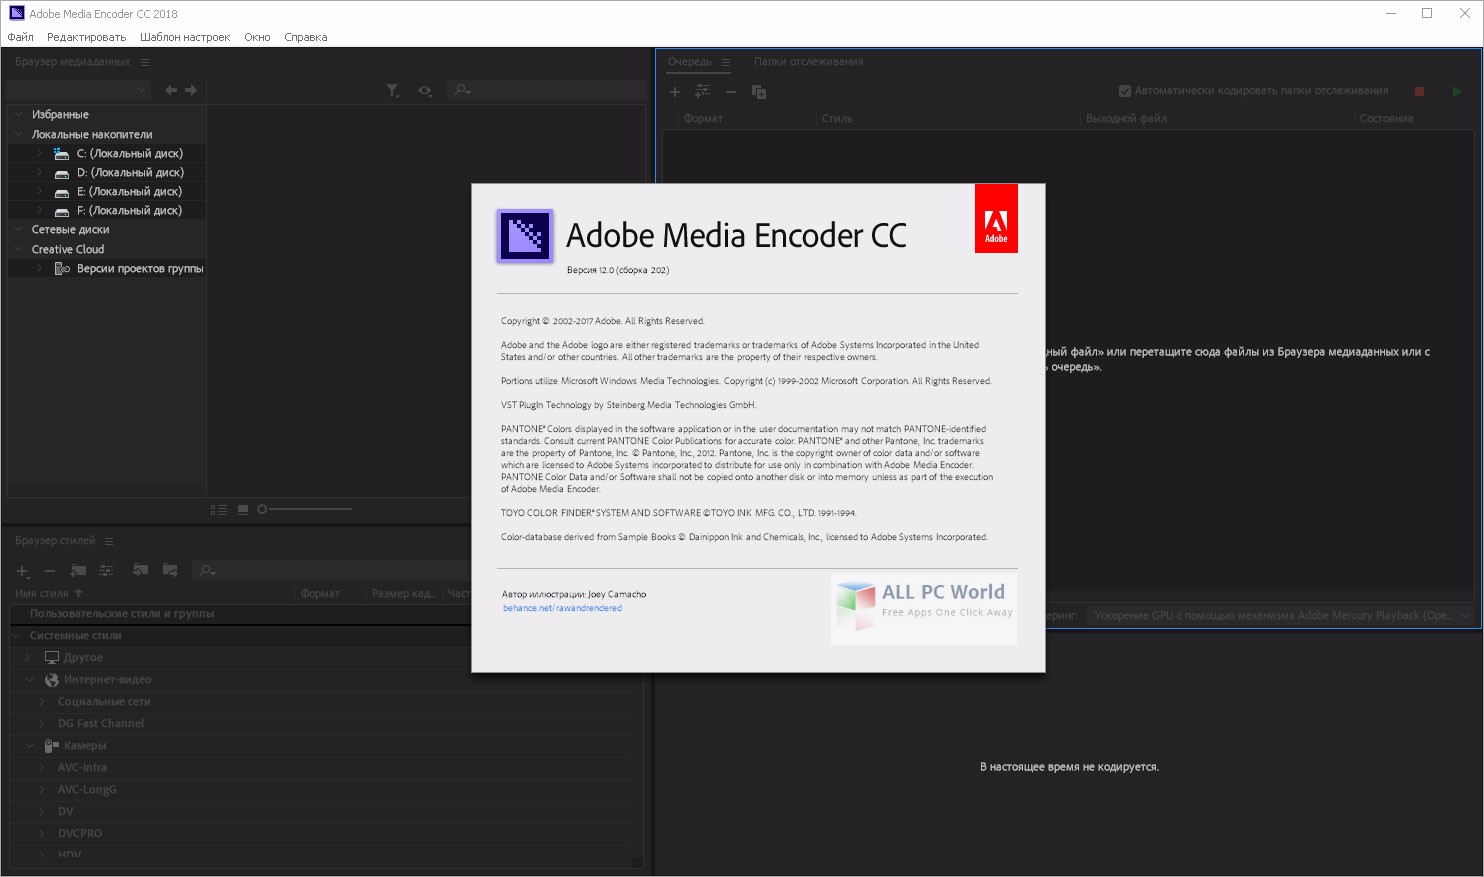 Adobe Media Encoder CC 2018 12.0 Review